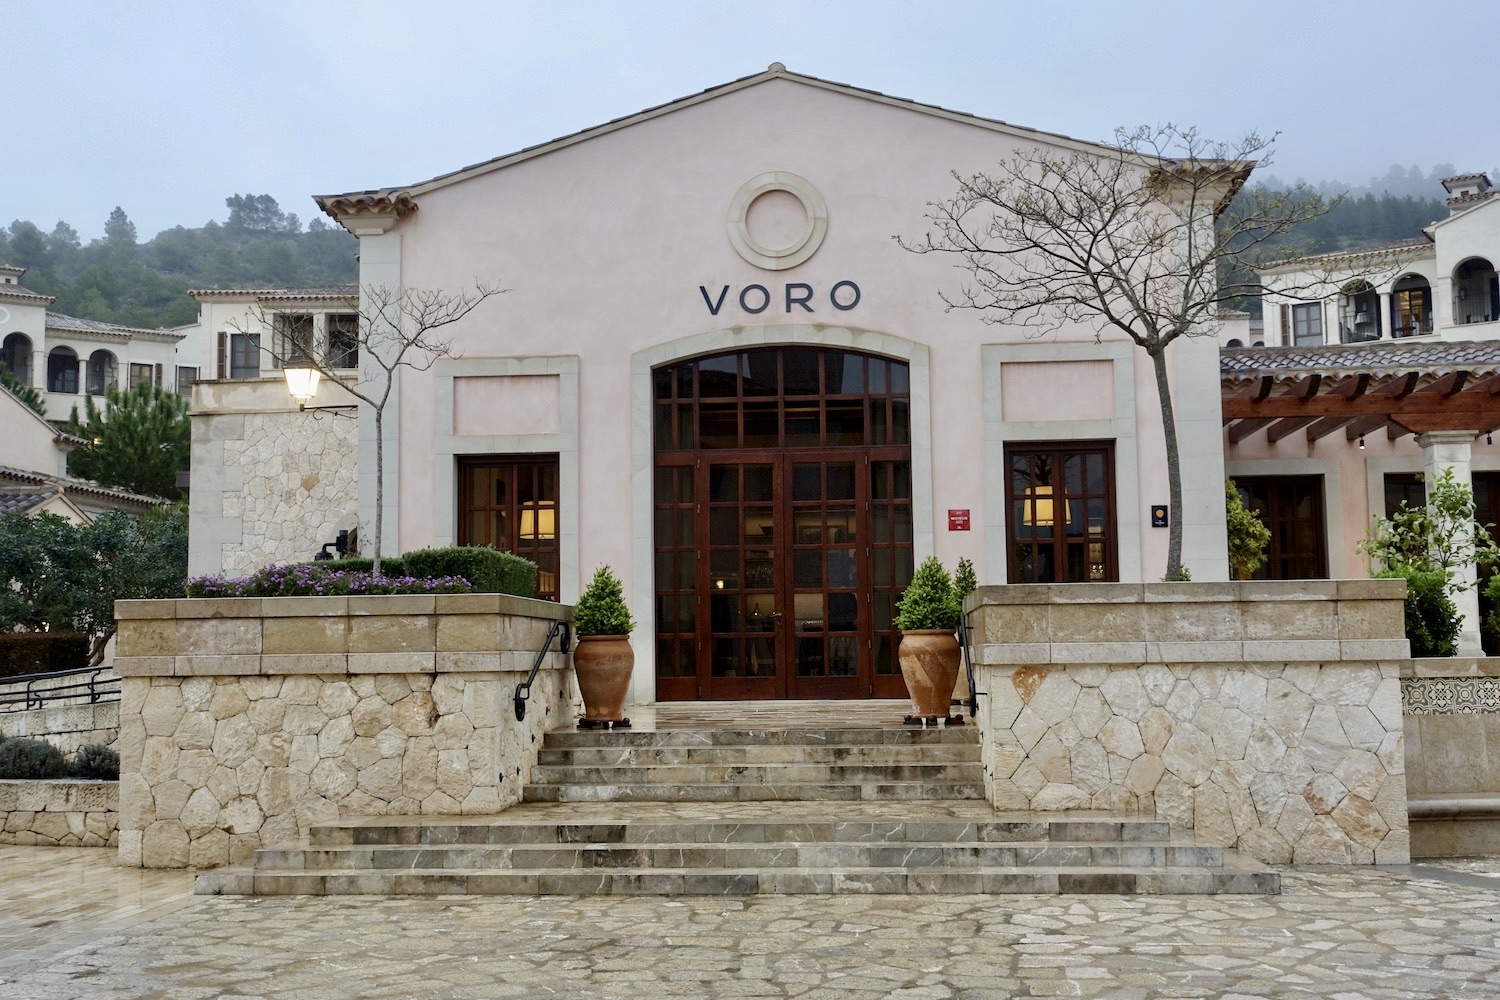 Restaurant Voro Canyamel 2-star Michelin Mallorca/Spain/